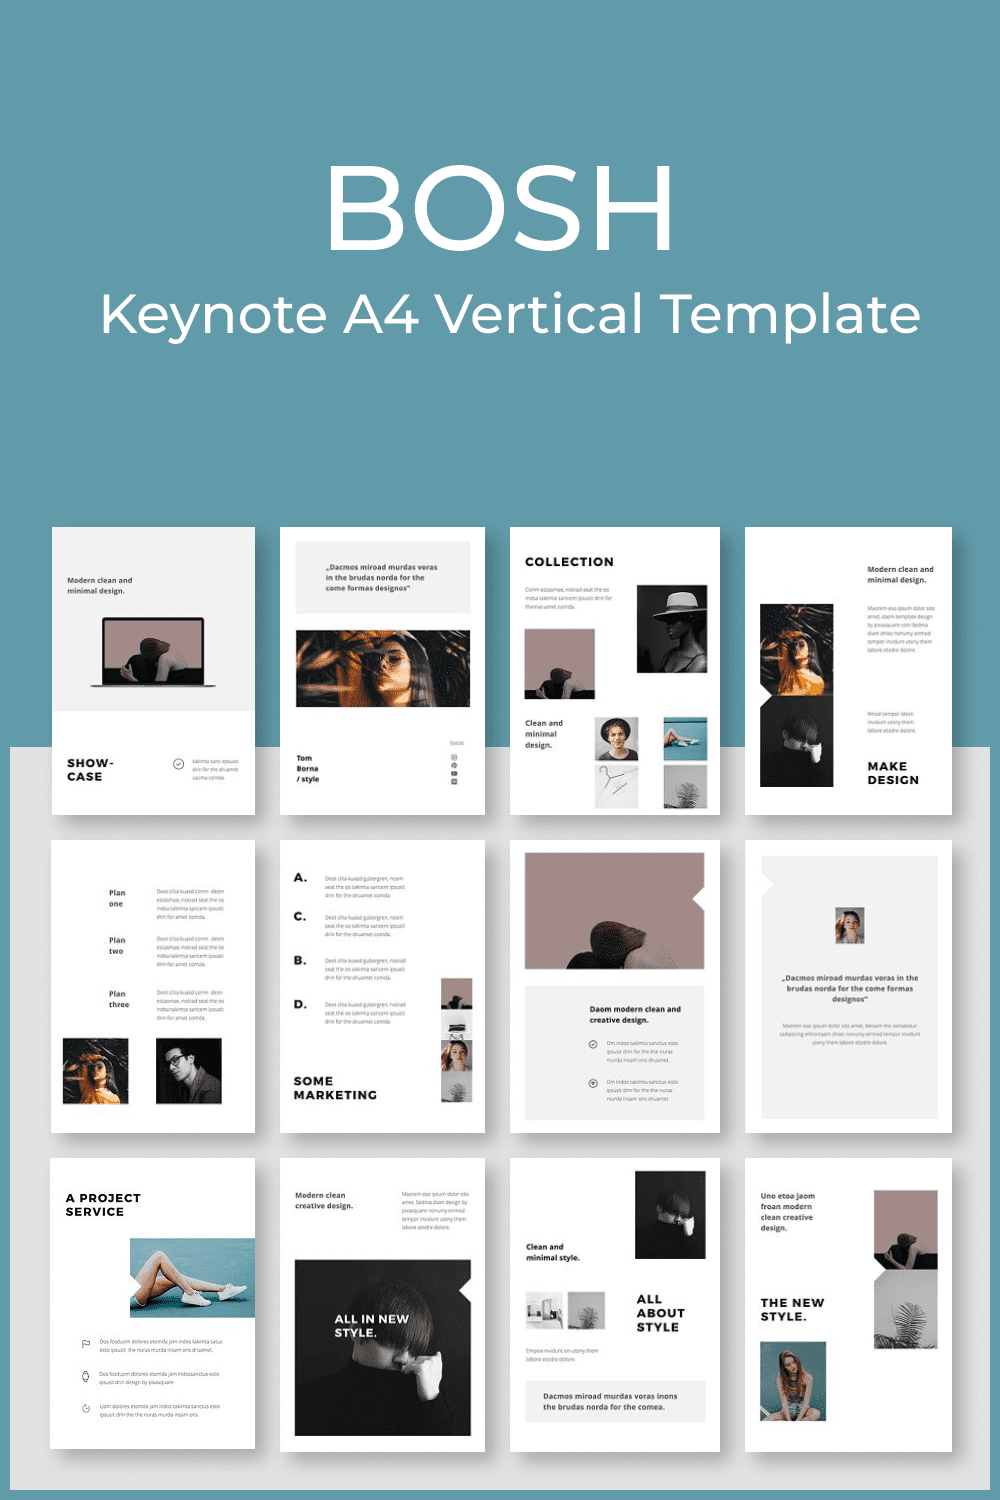 BOSH - Keynote A4 Vertical Template by MasterBundles Pinterest Collage Image.